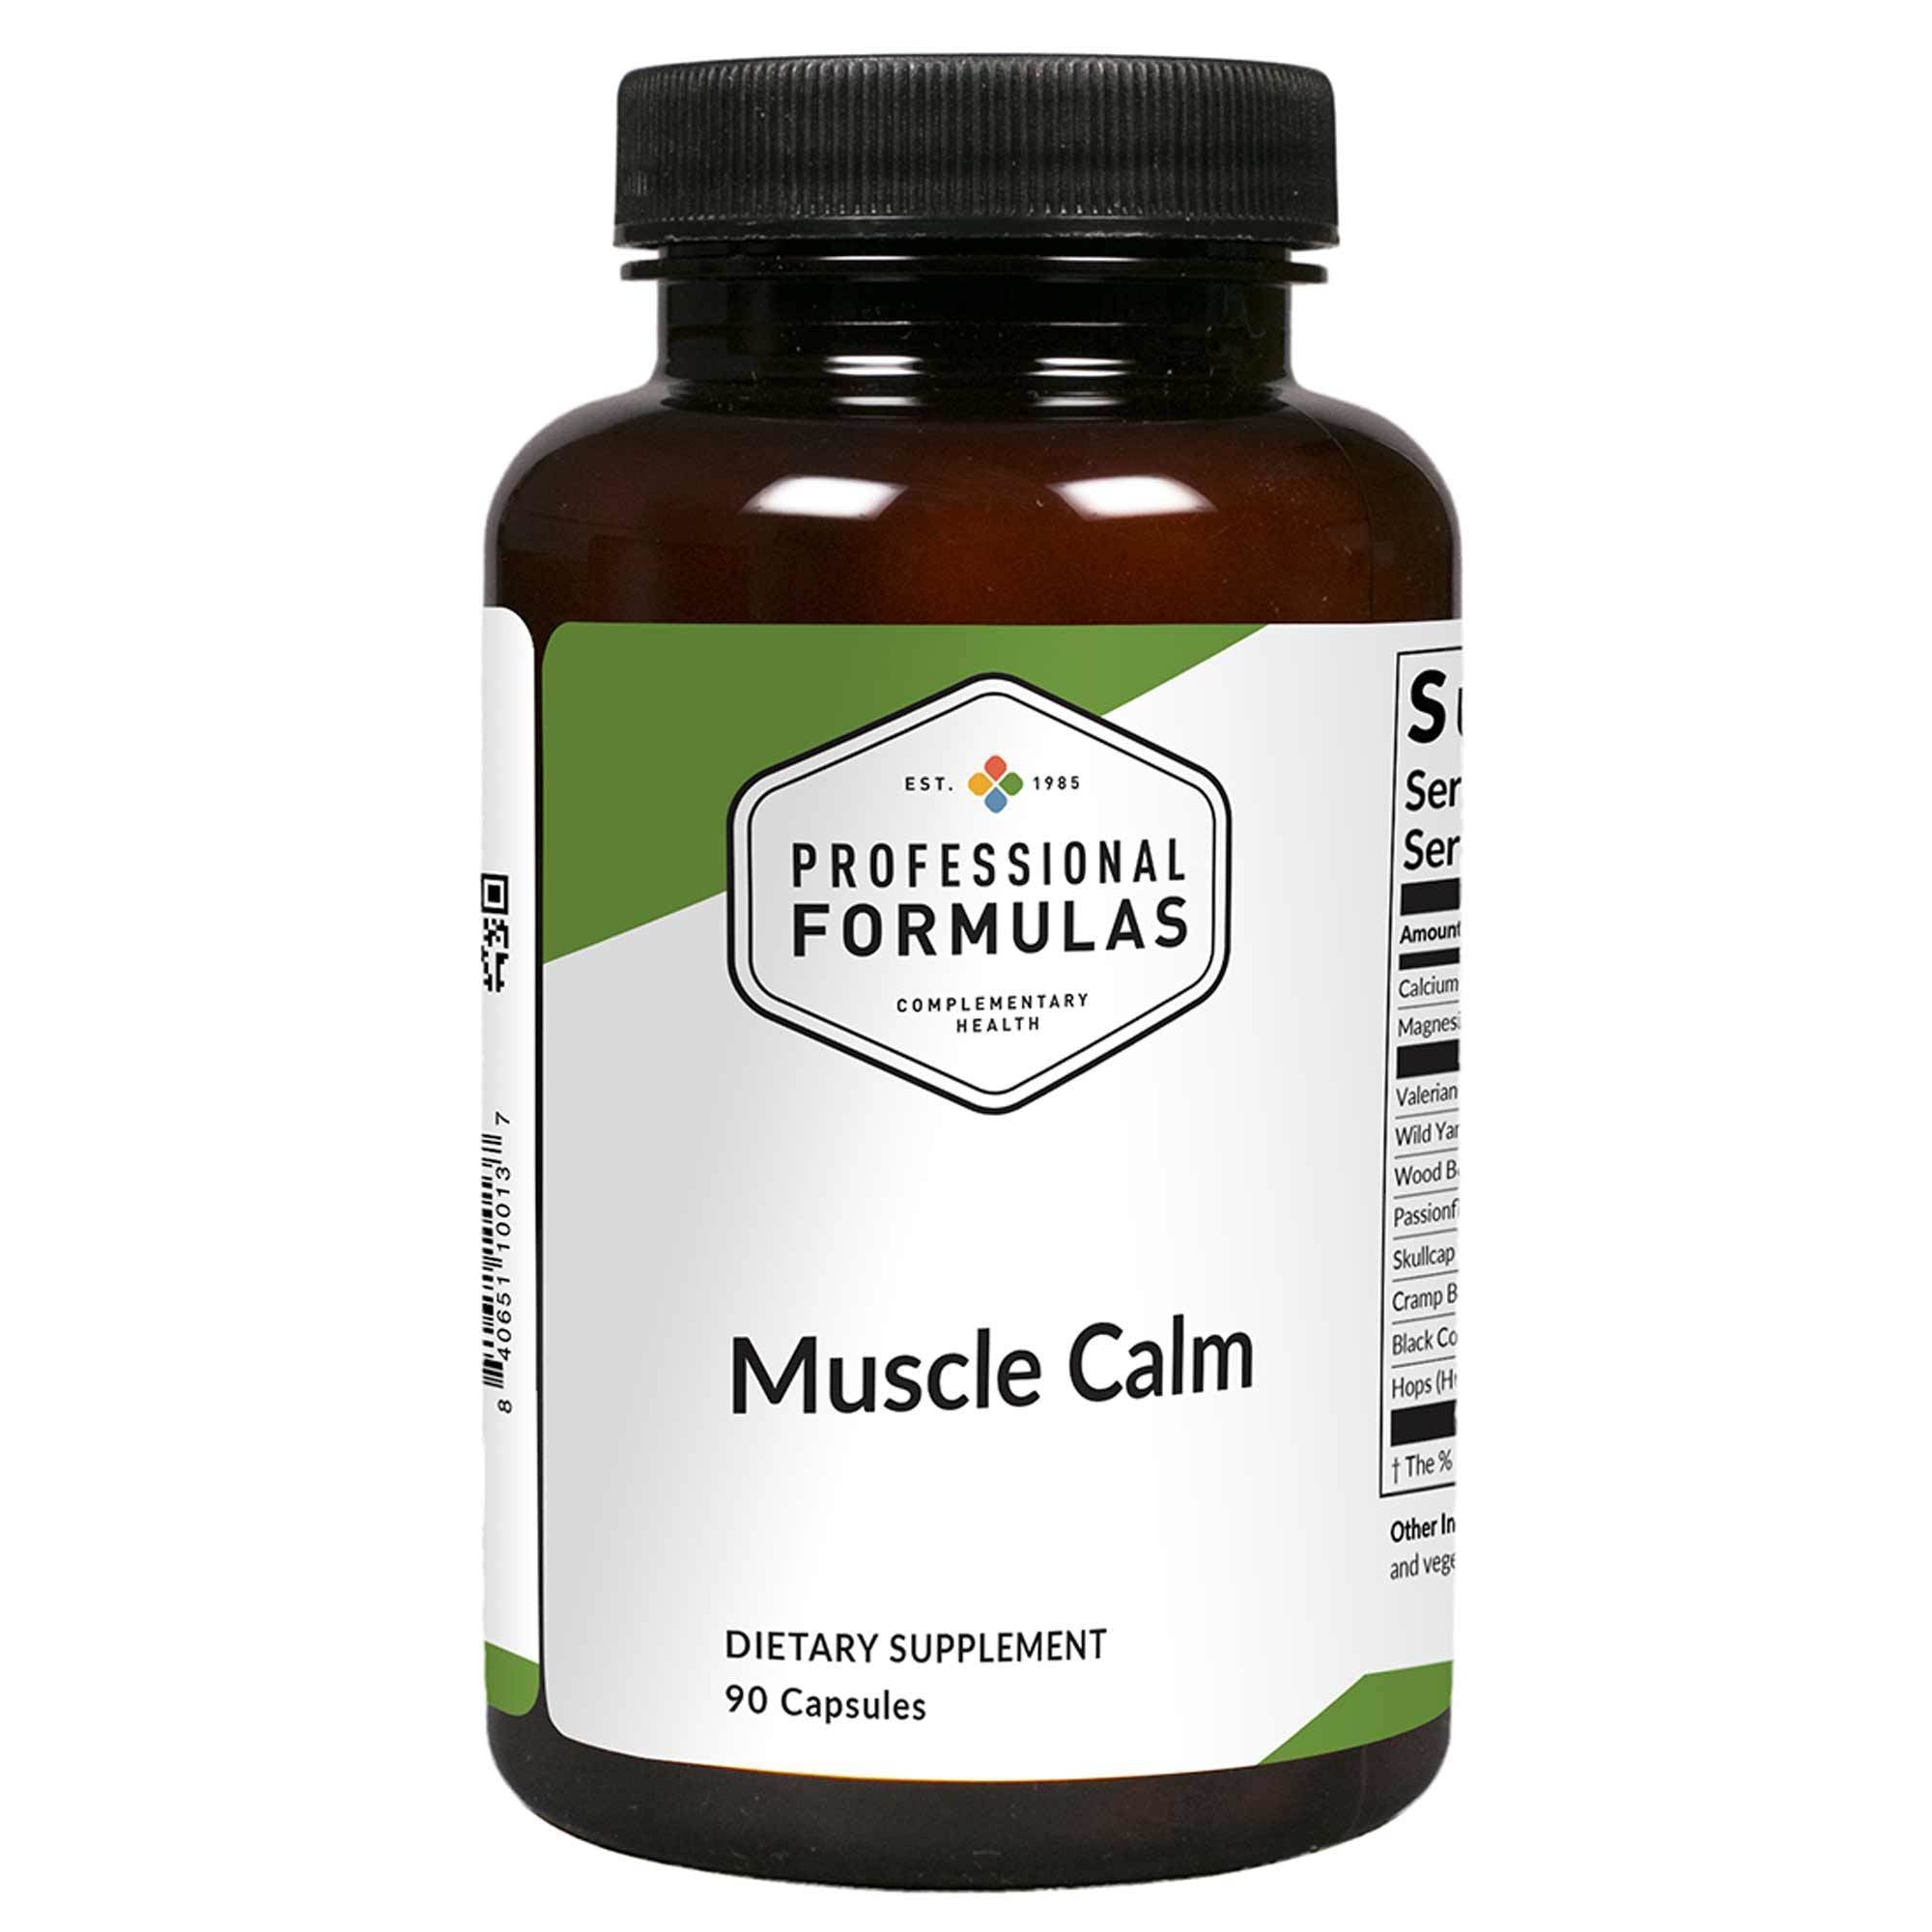 Professional Formulas Muscle Calm 90 Capsules - 2 Pack